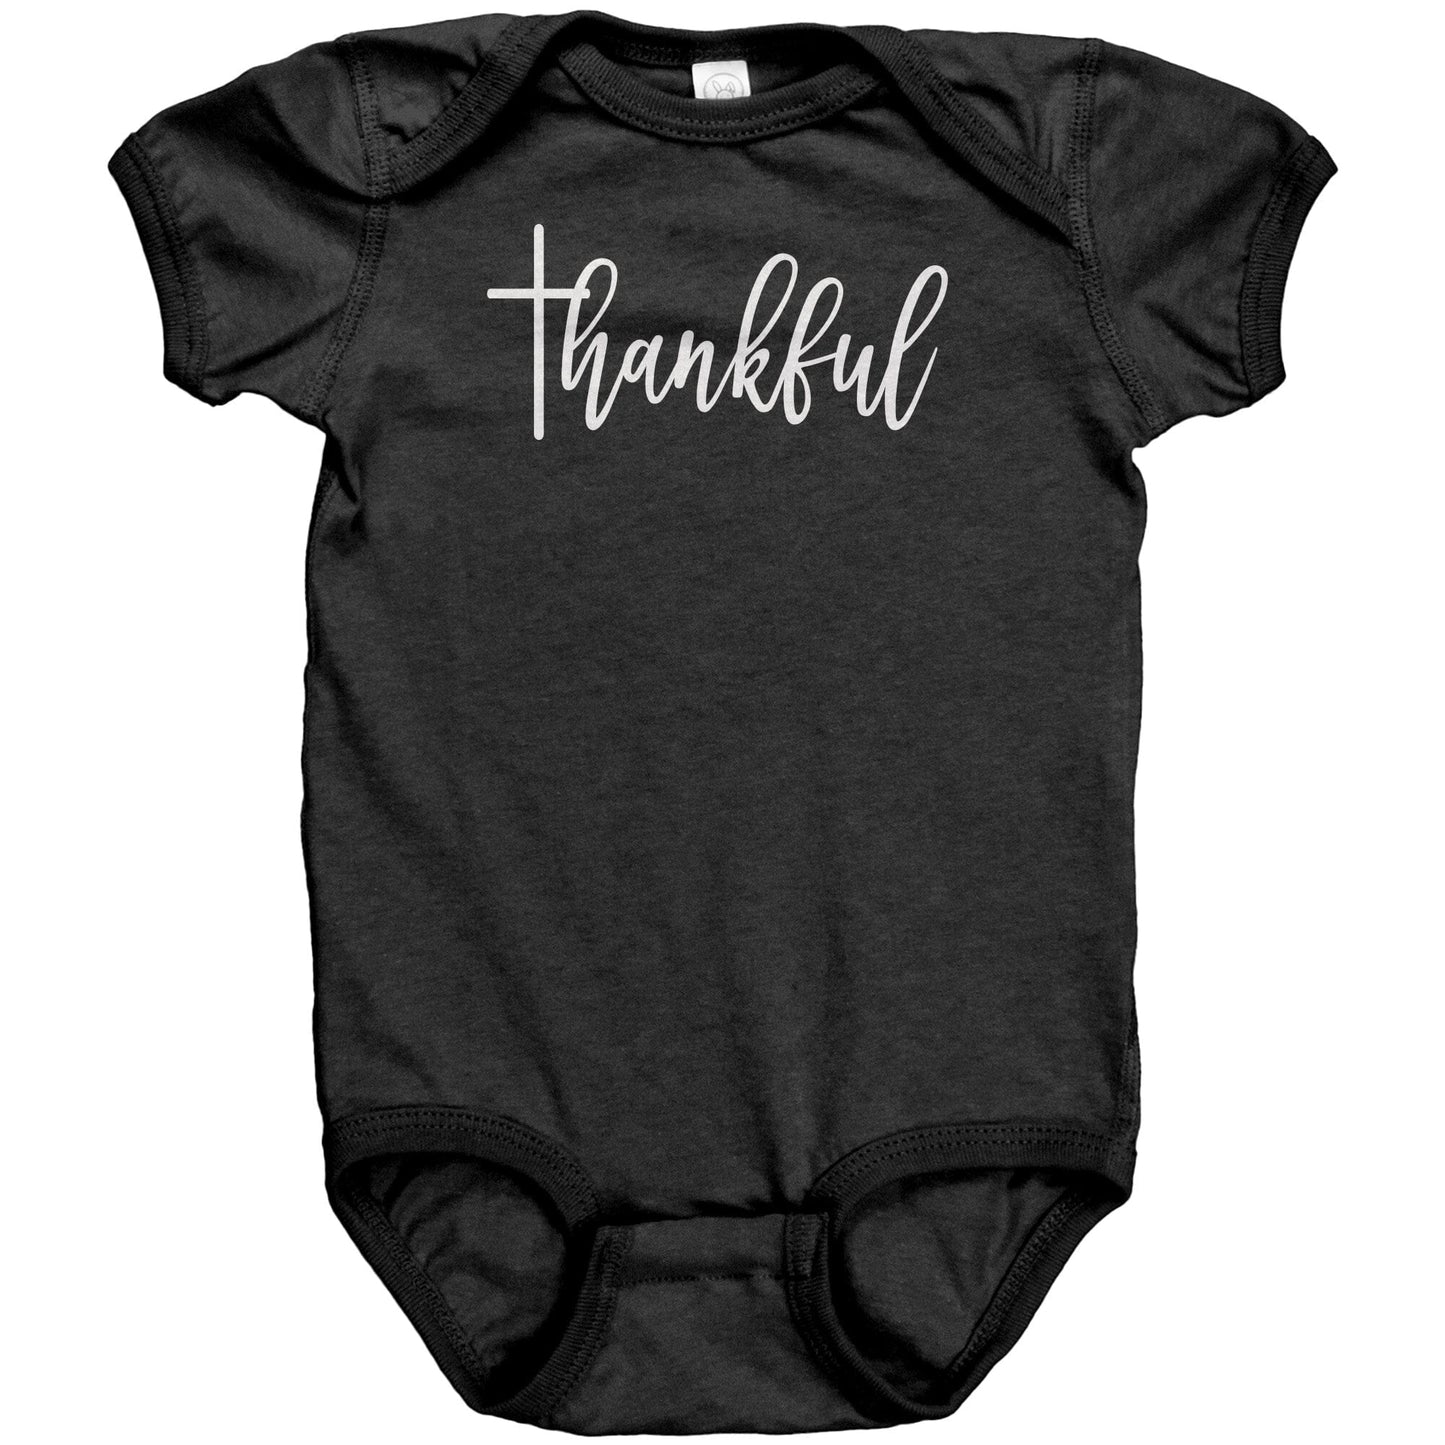 Thankful Baby Bodysuit